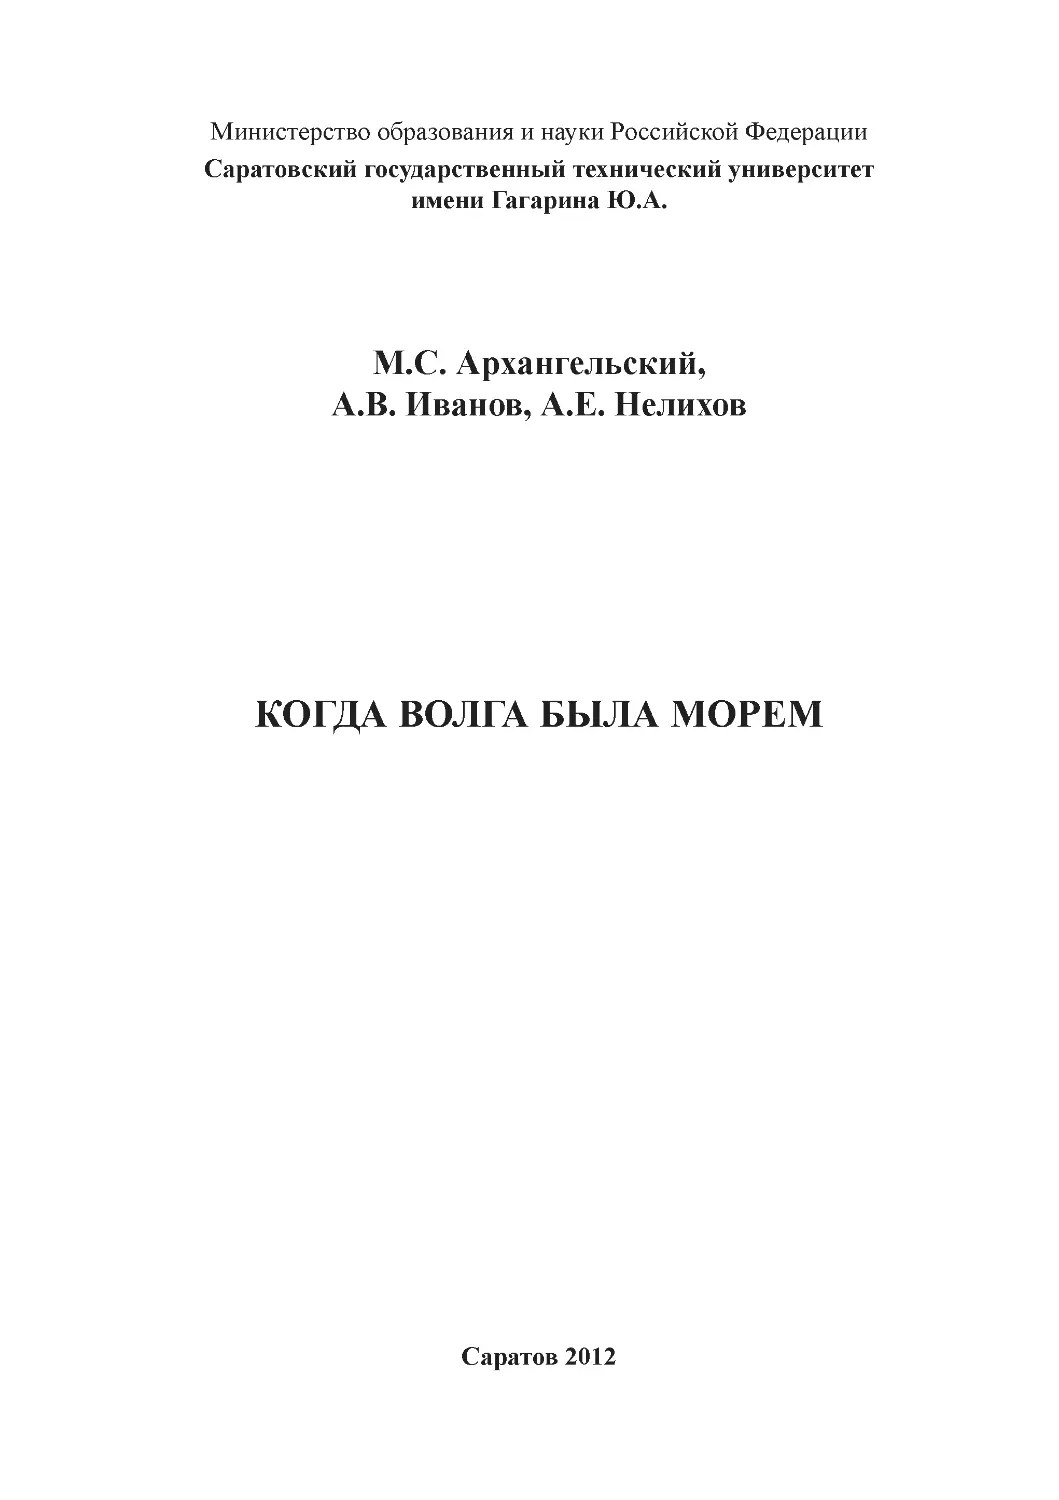 Arkhangelsky et al.,2012_Volga